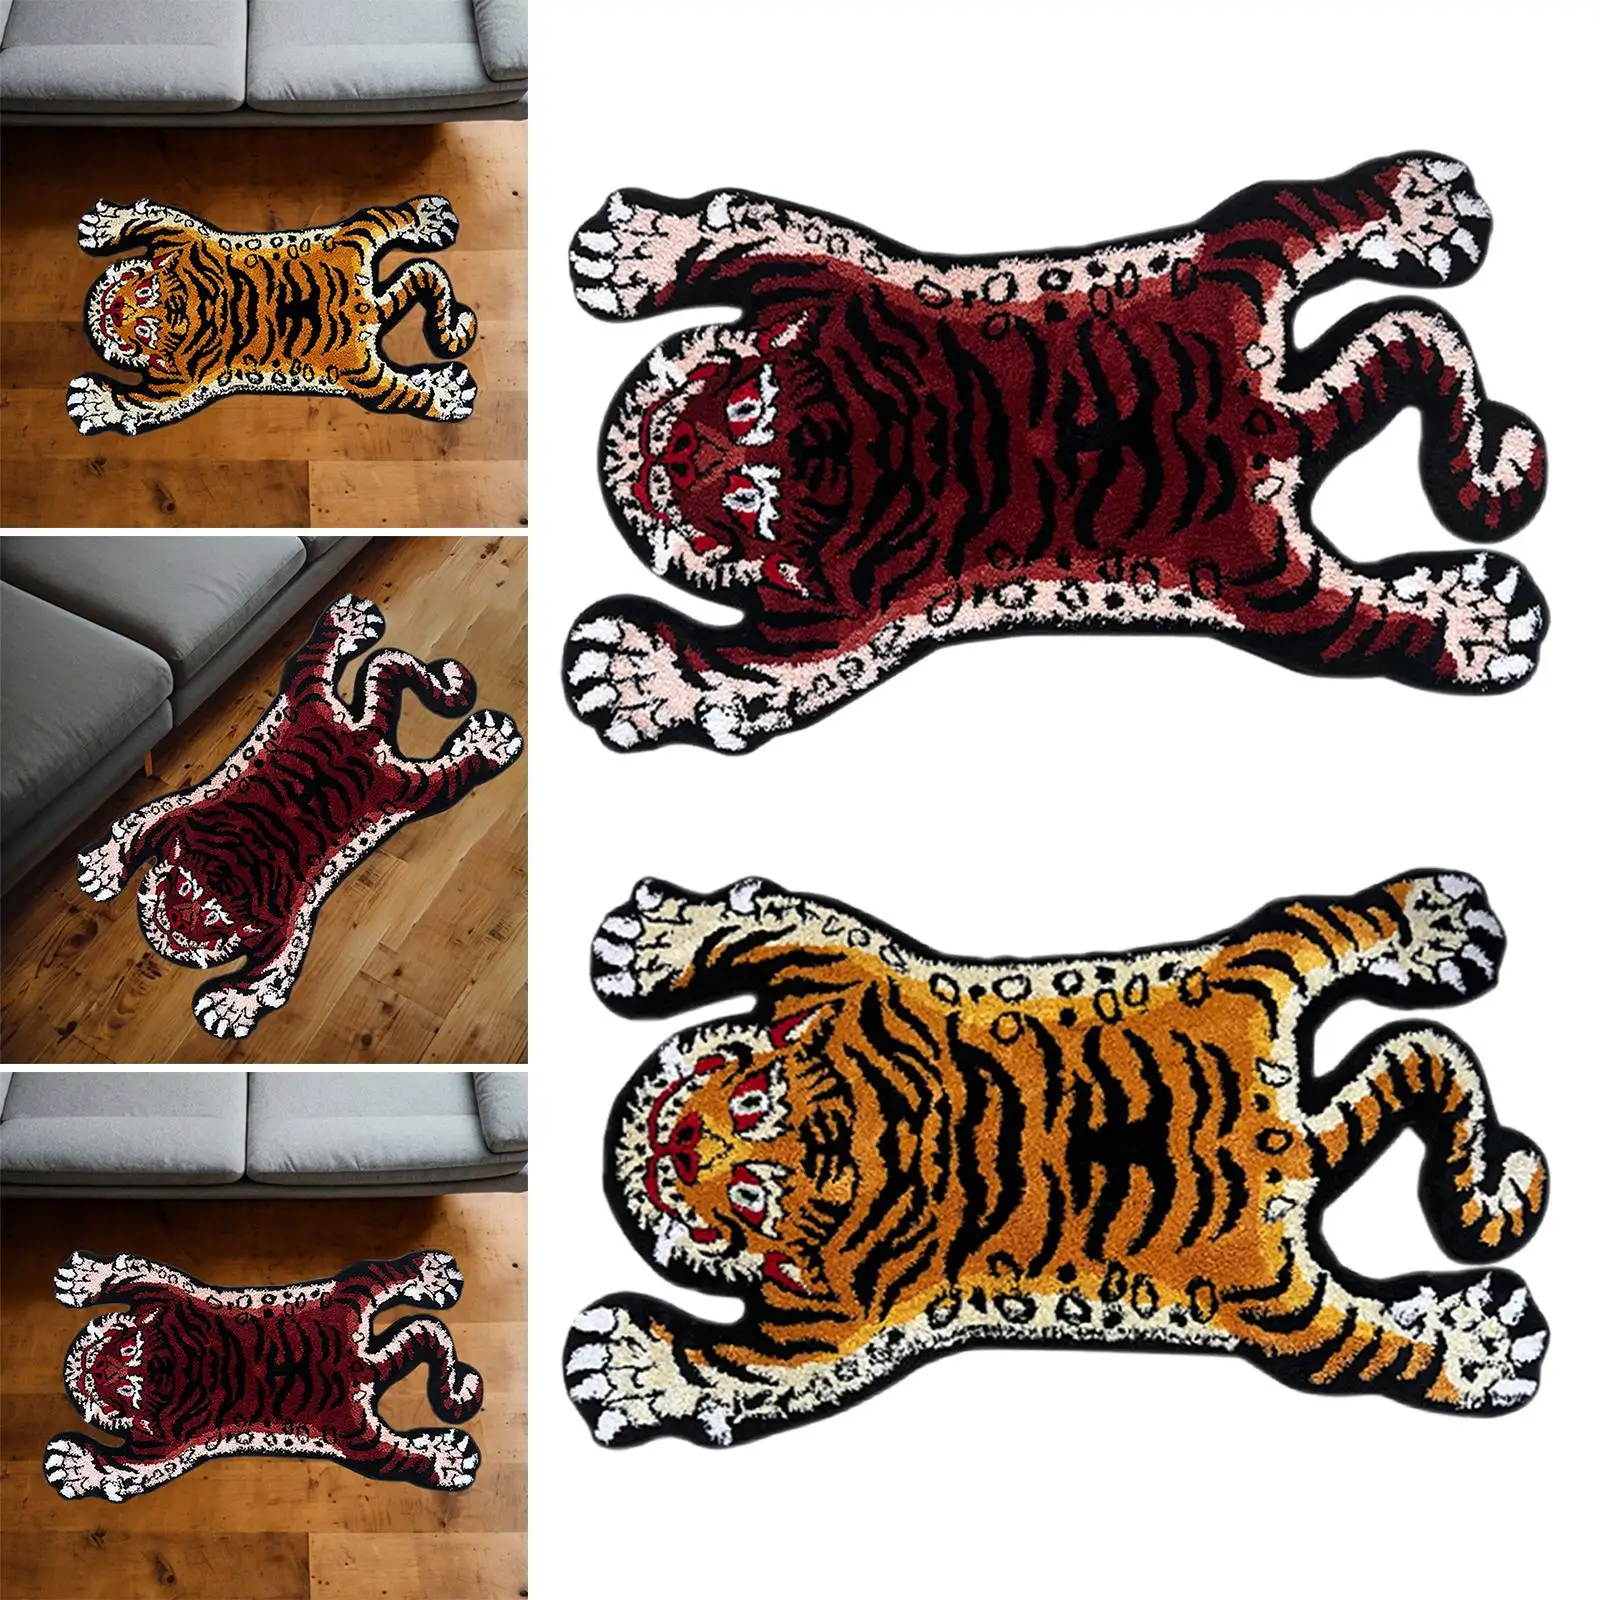 Tiger Rug Tiger Carpet Washable Small Area Rug Animal Shaped Rug for Kid`s Room